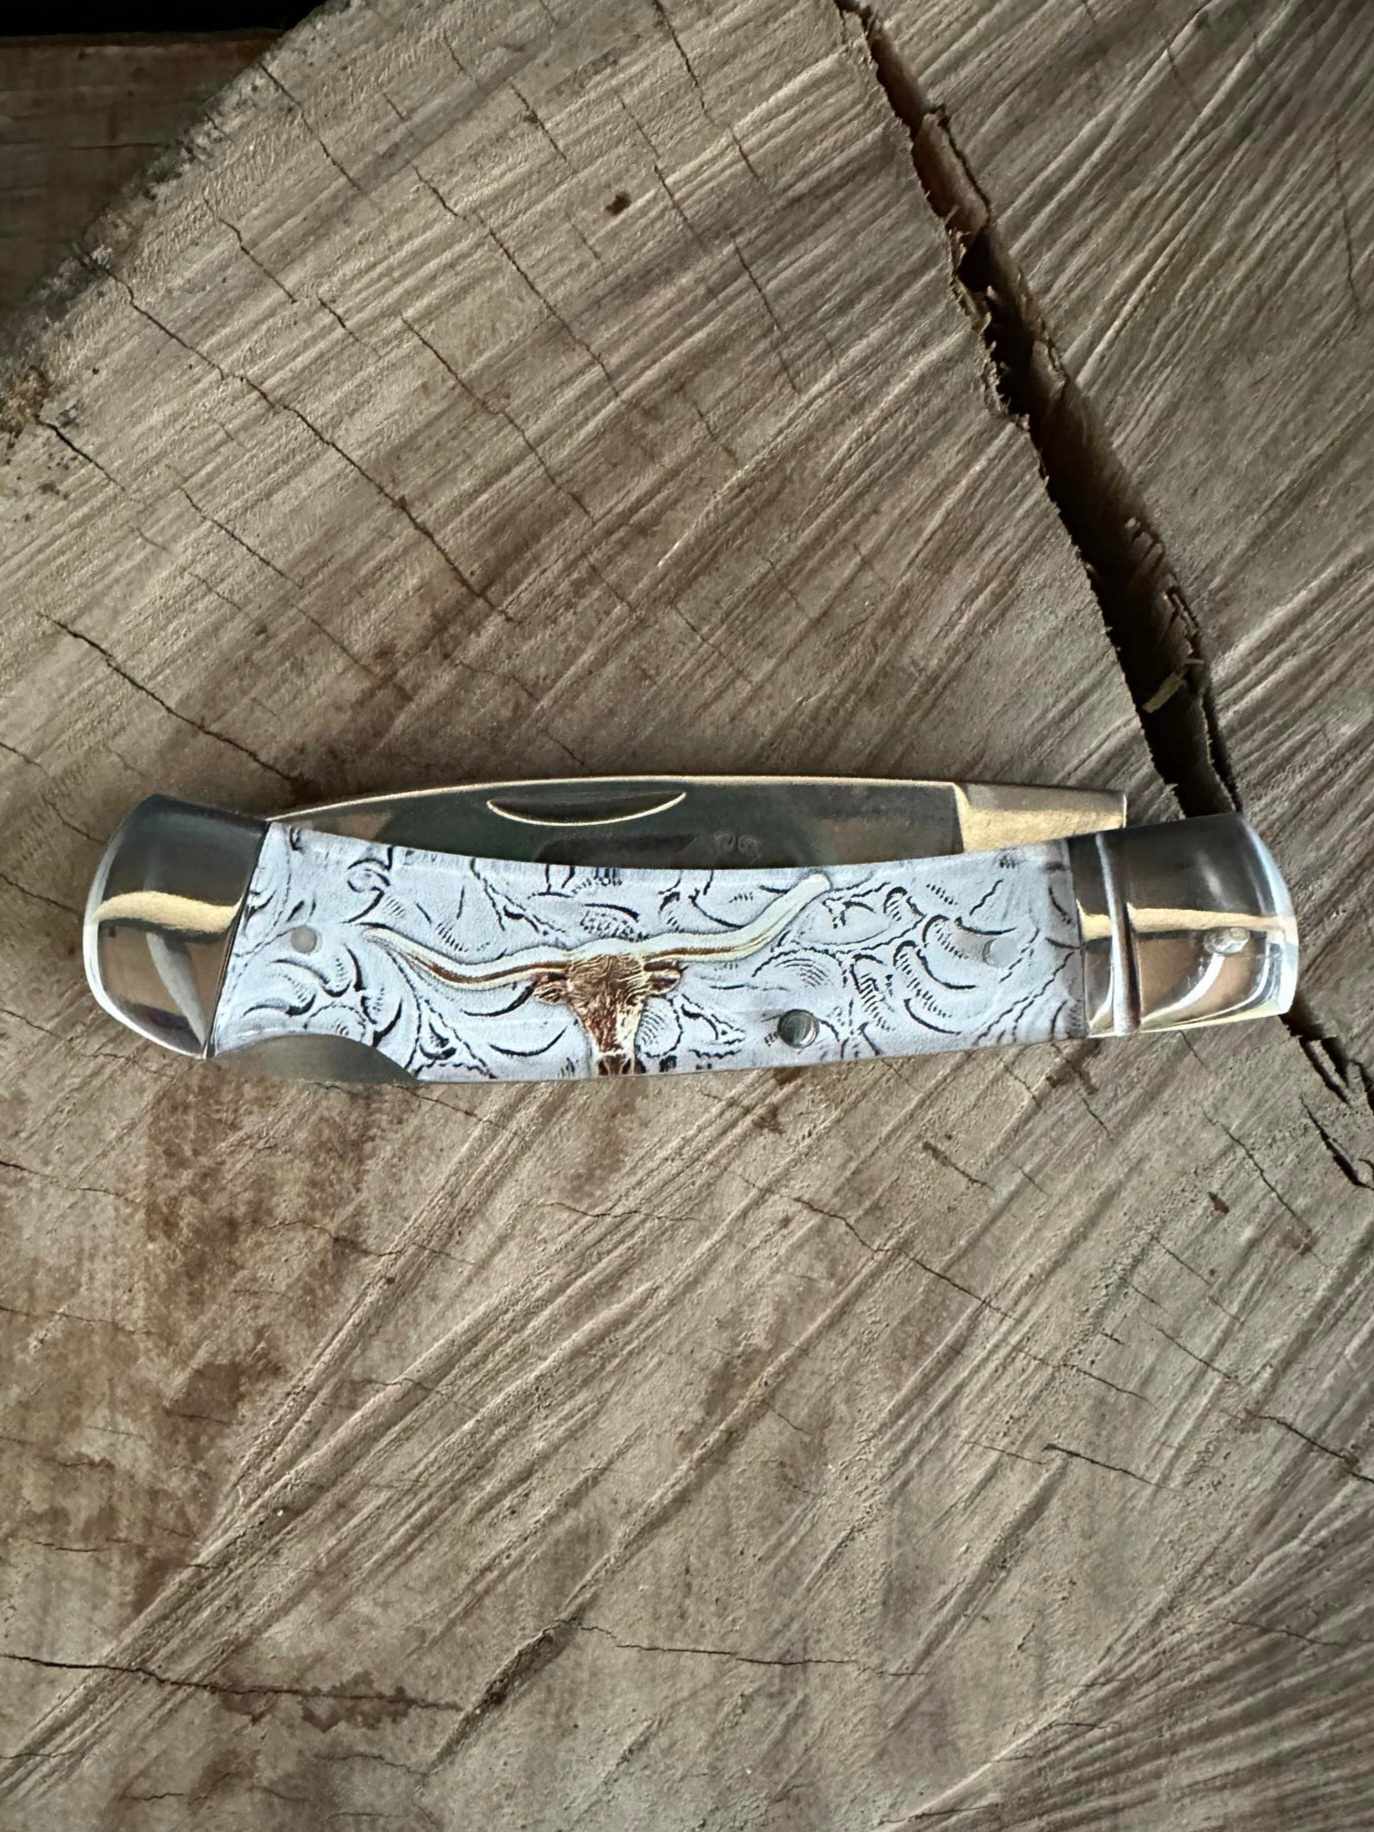 Knife - Old Ram Longhorn Stainless Blade Pocket Knive